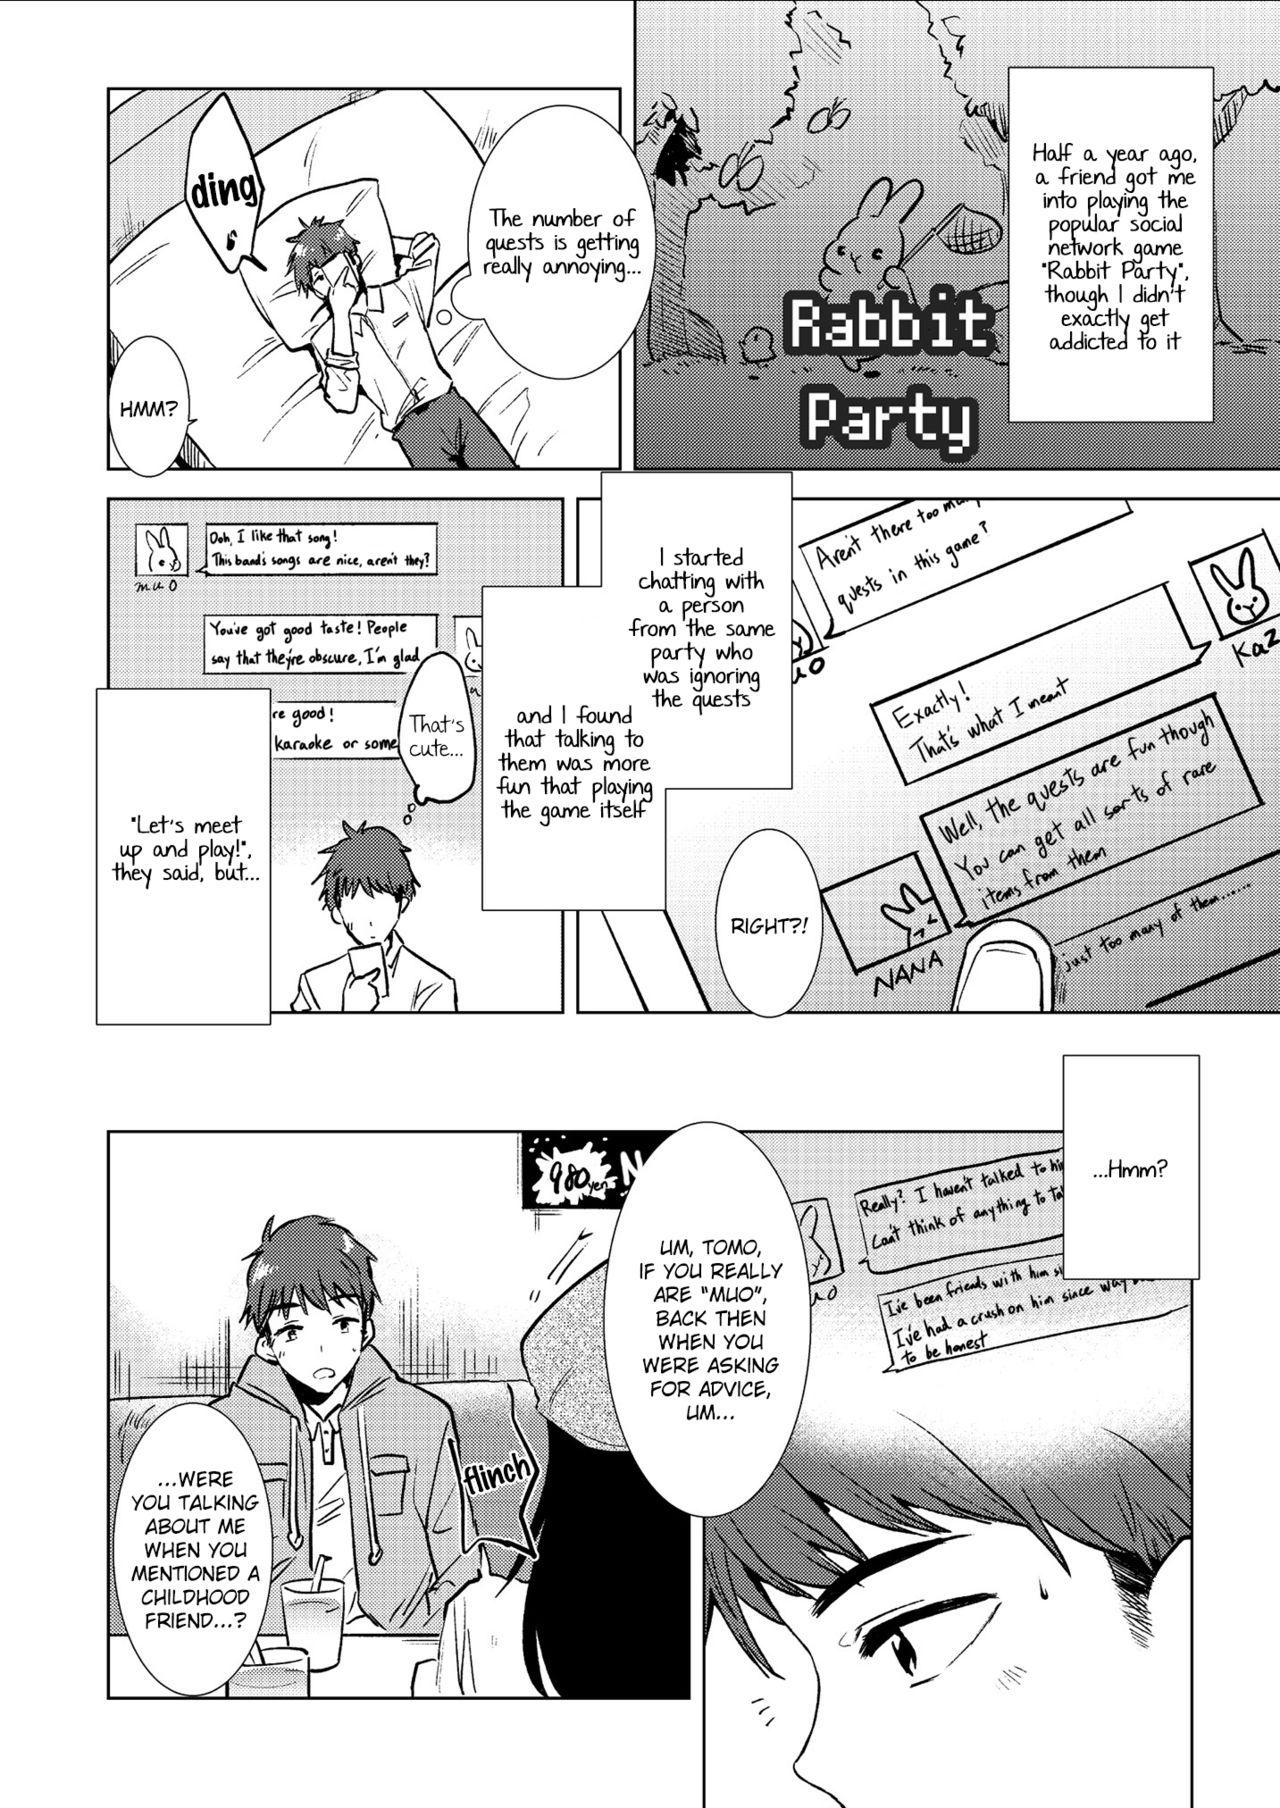 Cocks RabbitPartyoffline - Original Internal - Page 2